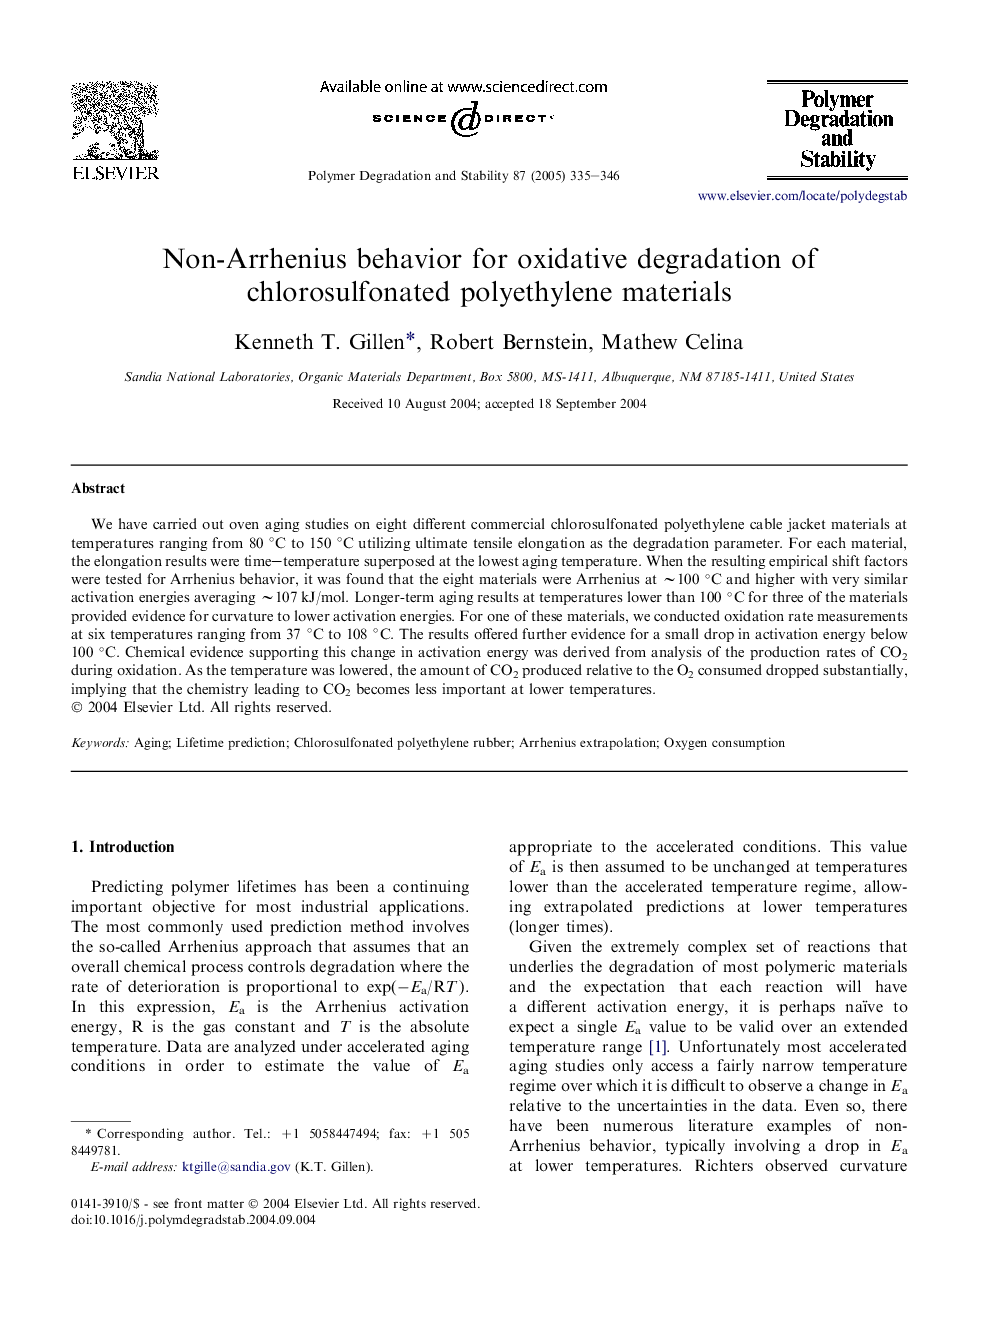 Non-Arrhenius behavior for oxidative degradation of chlorosulfonated polyethylene materials